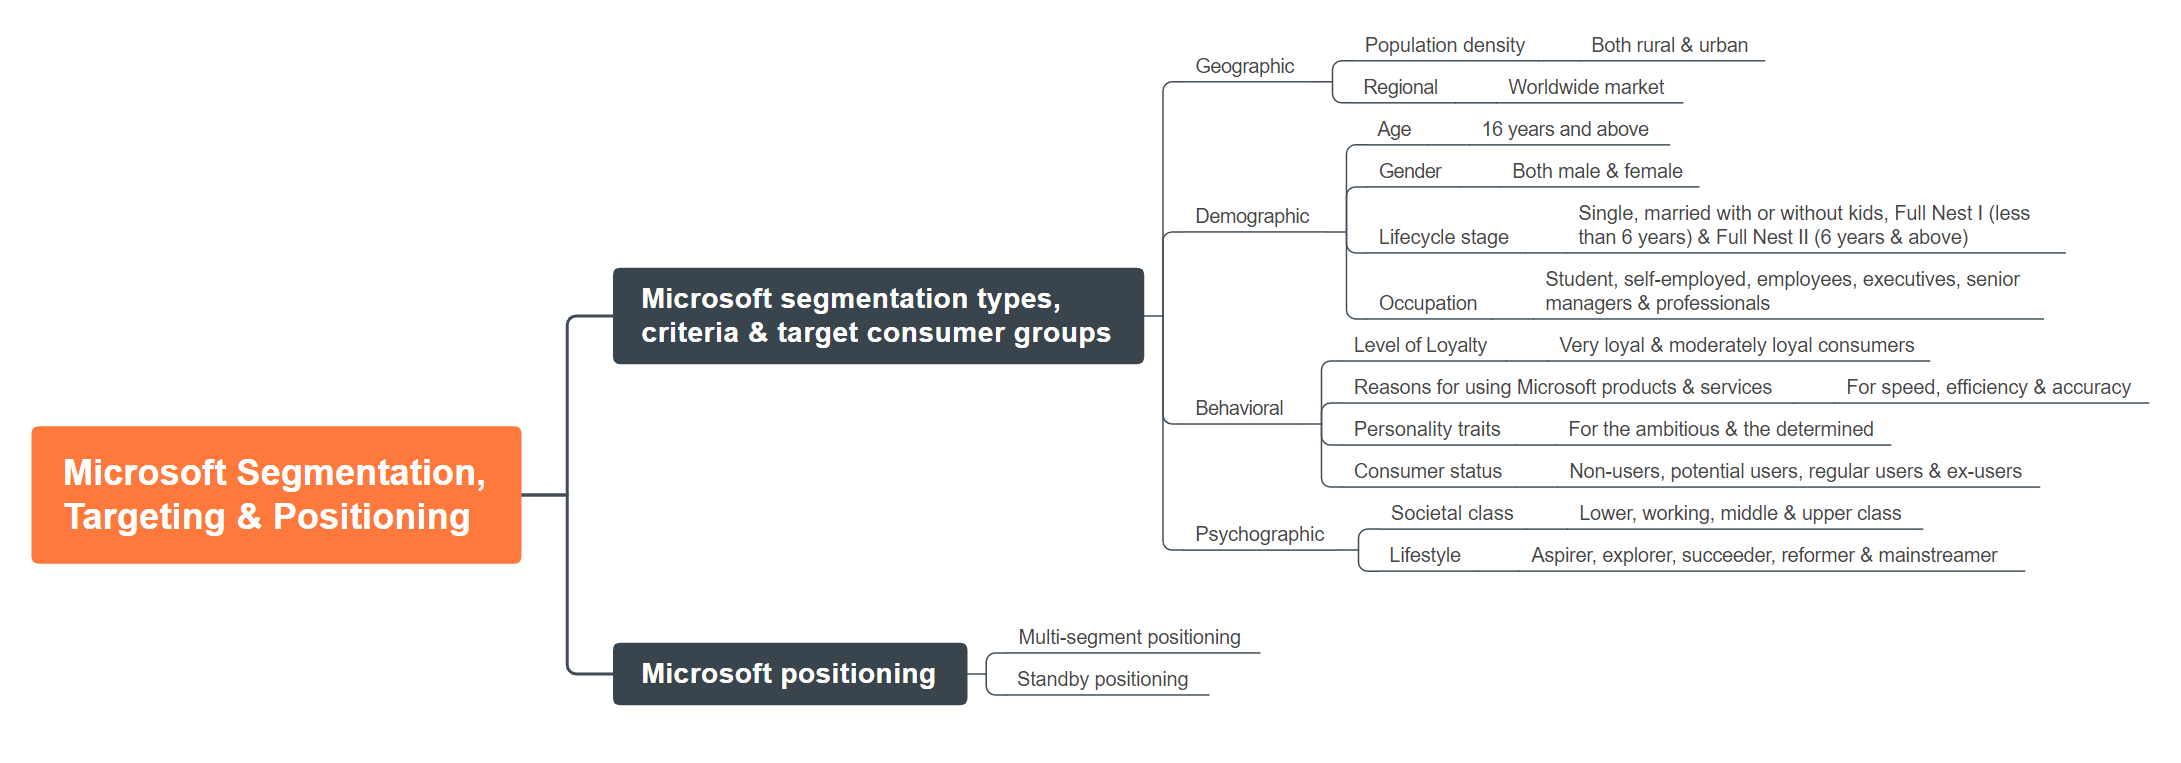 525 - Microsoft Segmentation, Targeting, and Positioning.png